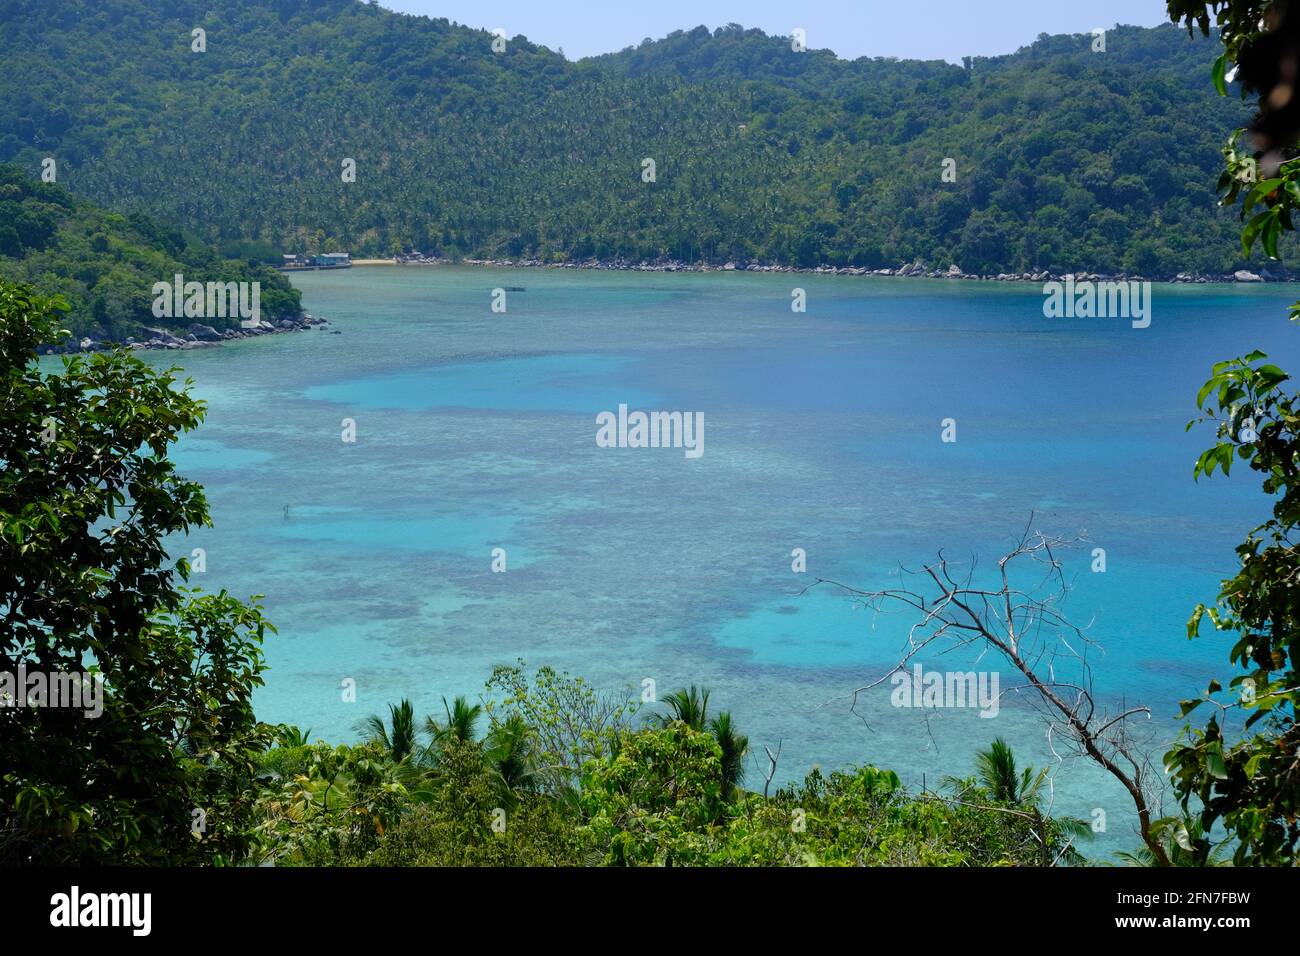 Indonesia Anambas Islands - Telaga Island bayview with corals Stock Photo